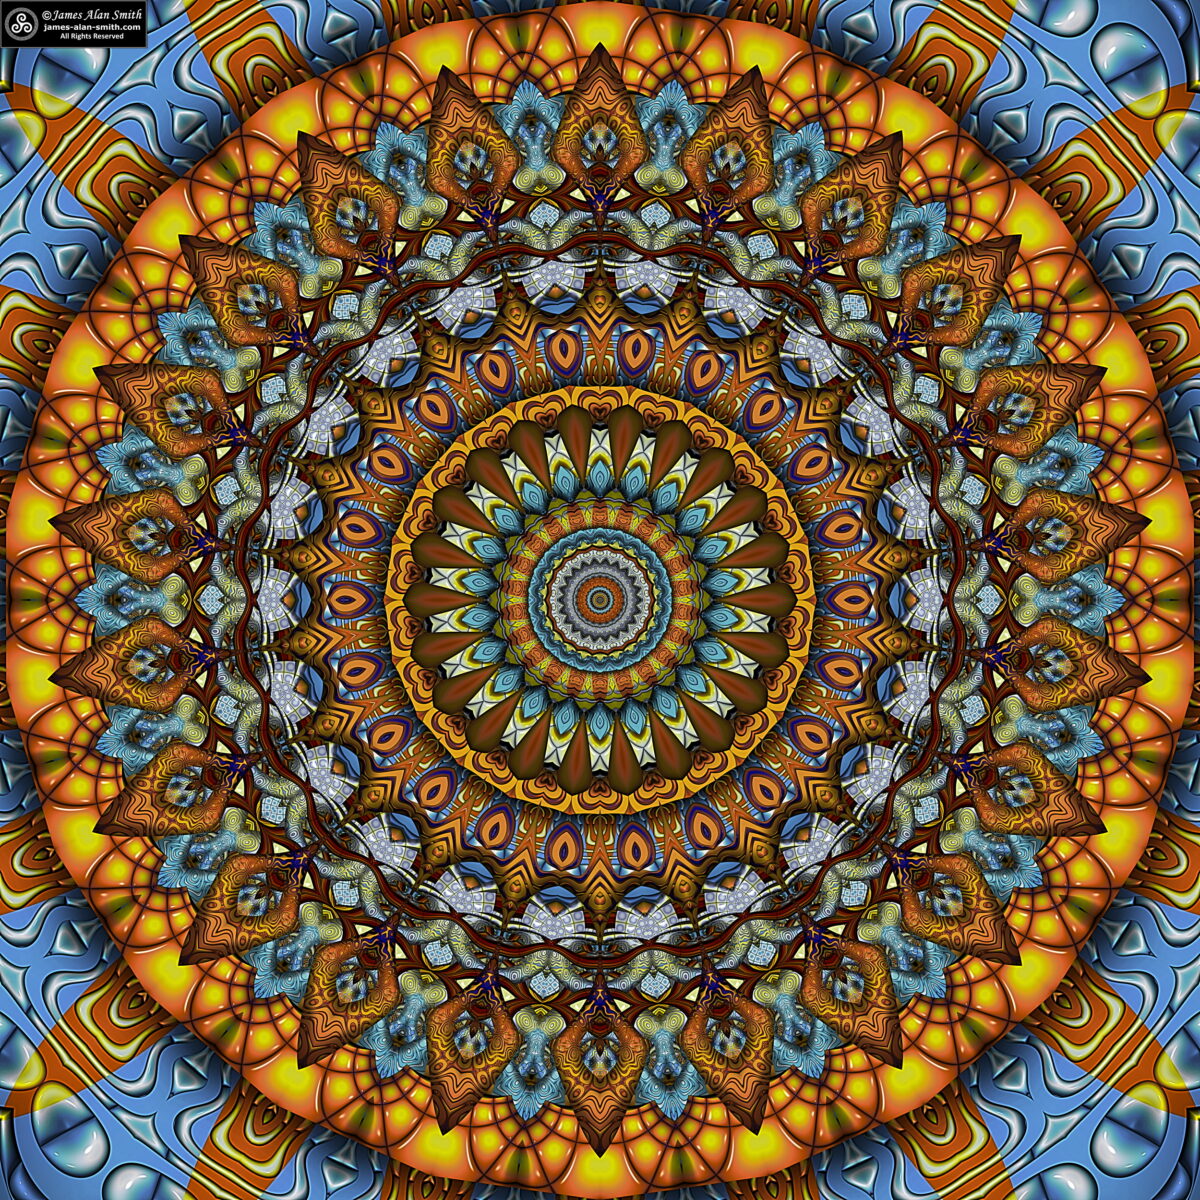 Mandala of Ecstatic Visions: Artwork by James Alan Smith